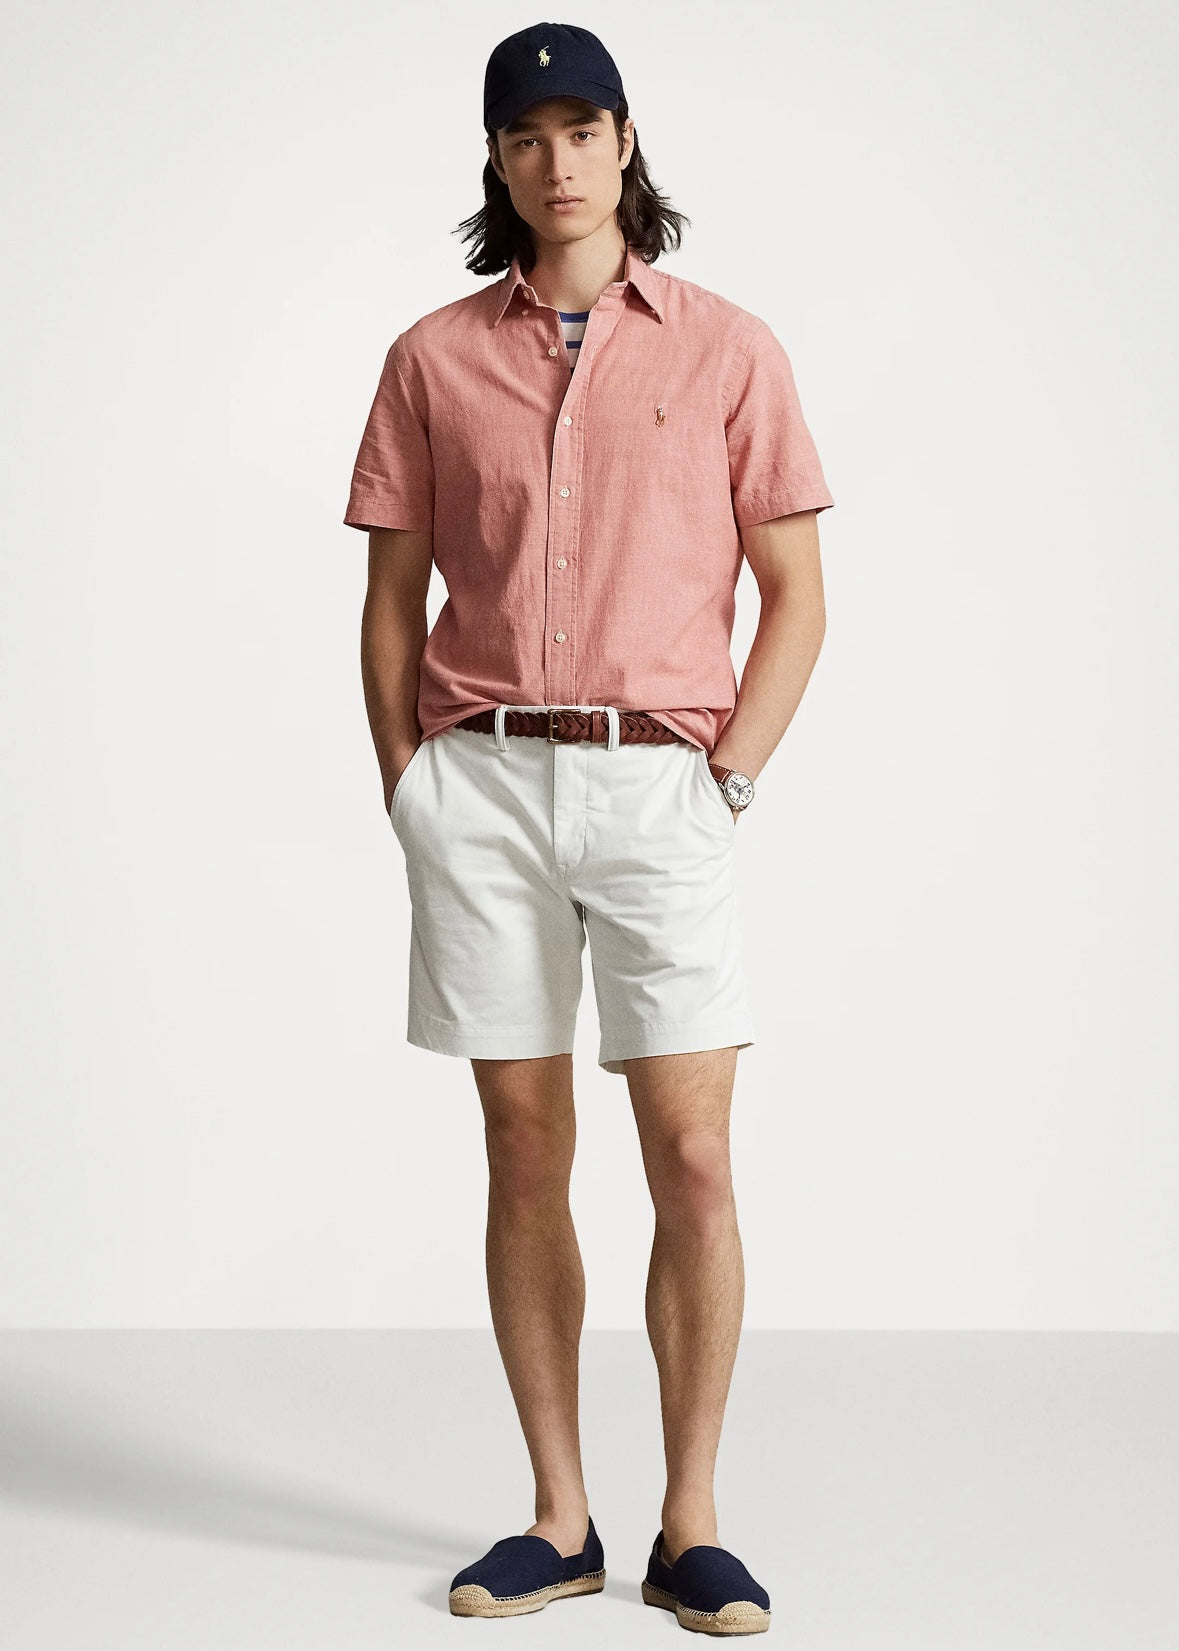 Polo Ralph Lauren Stretch Straight Fit shorts - Deckwash White